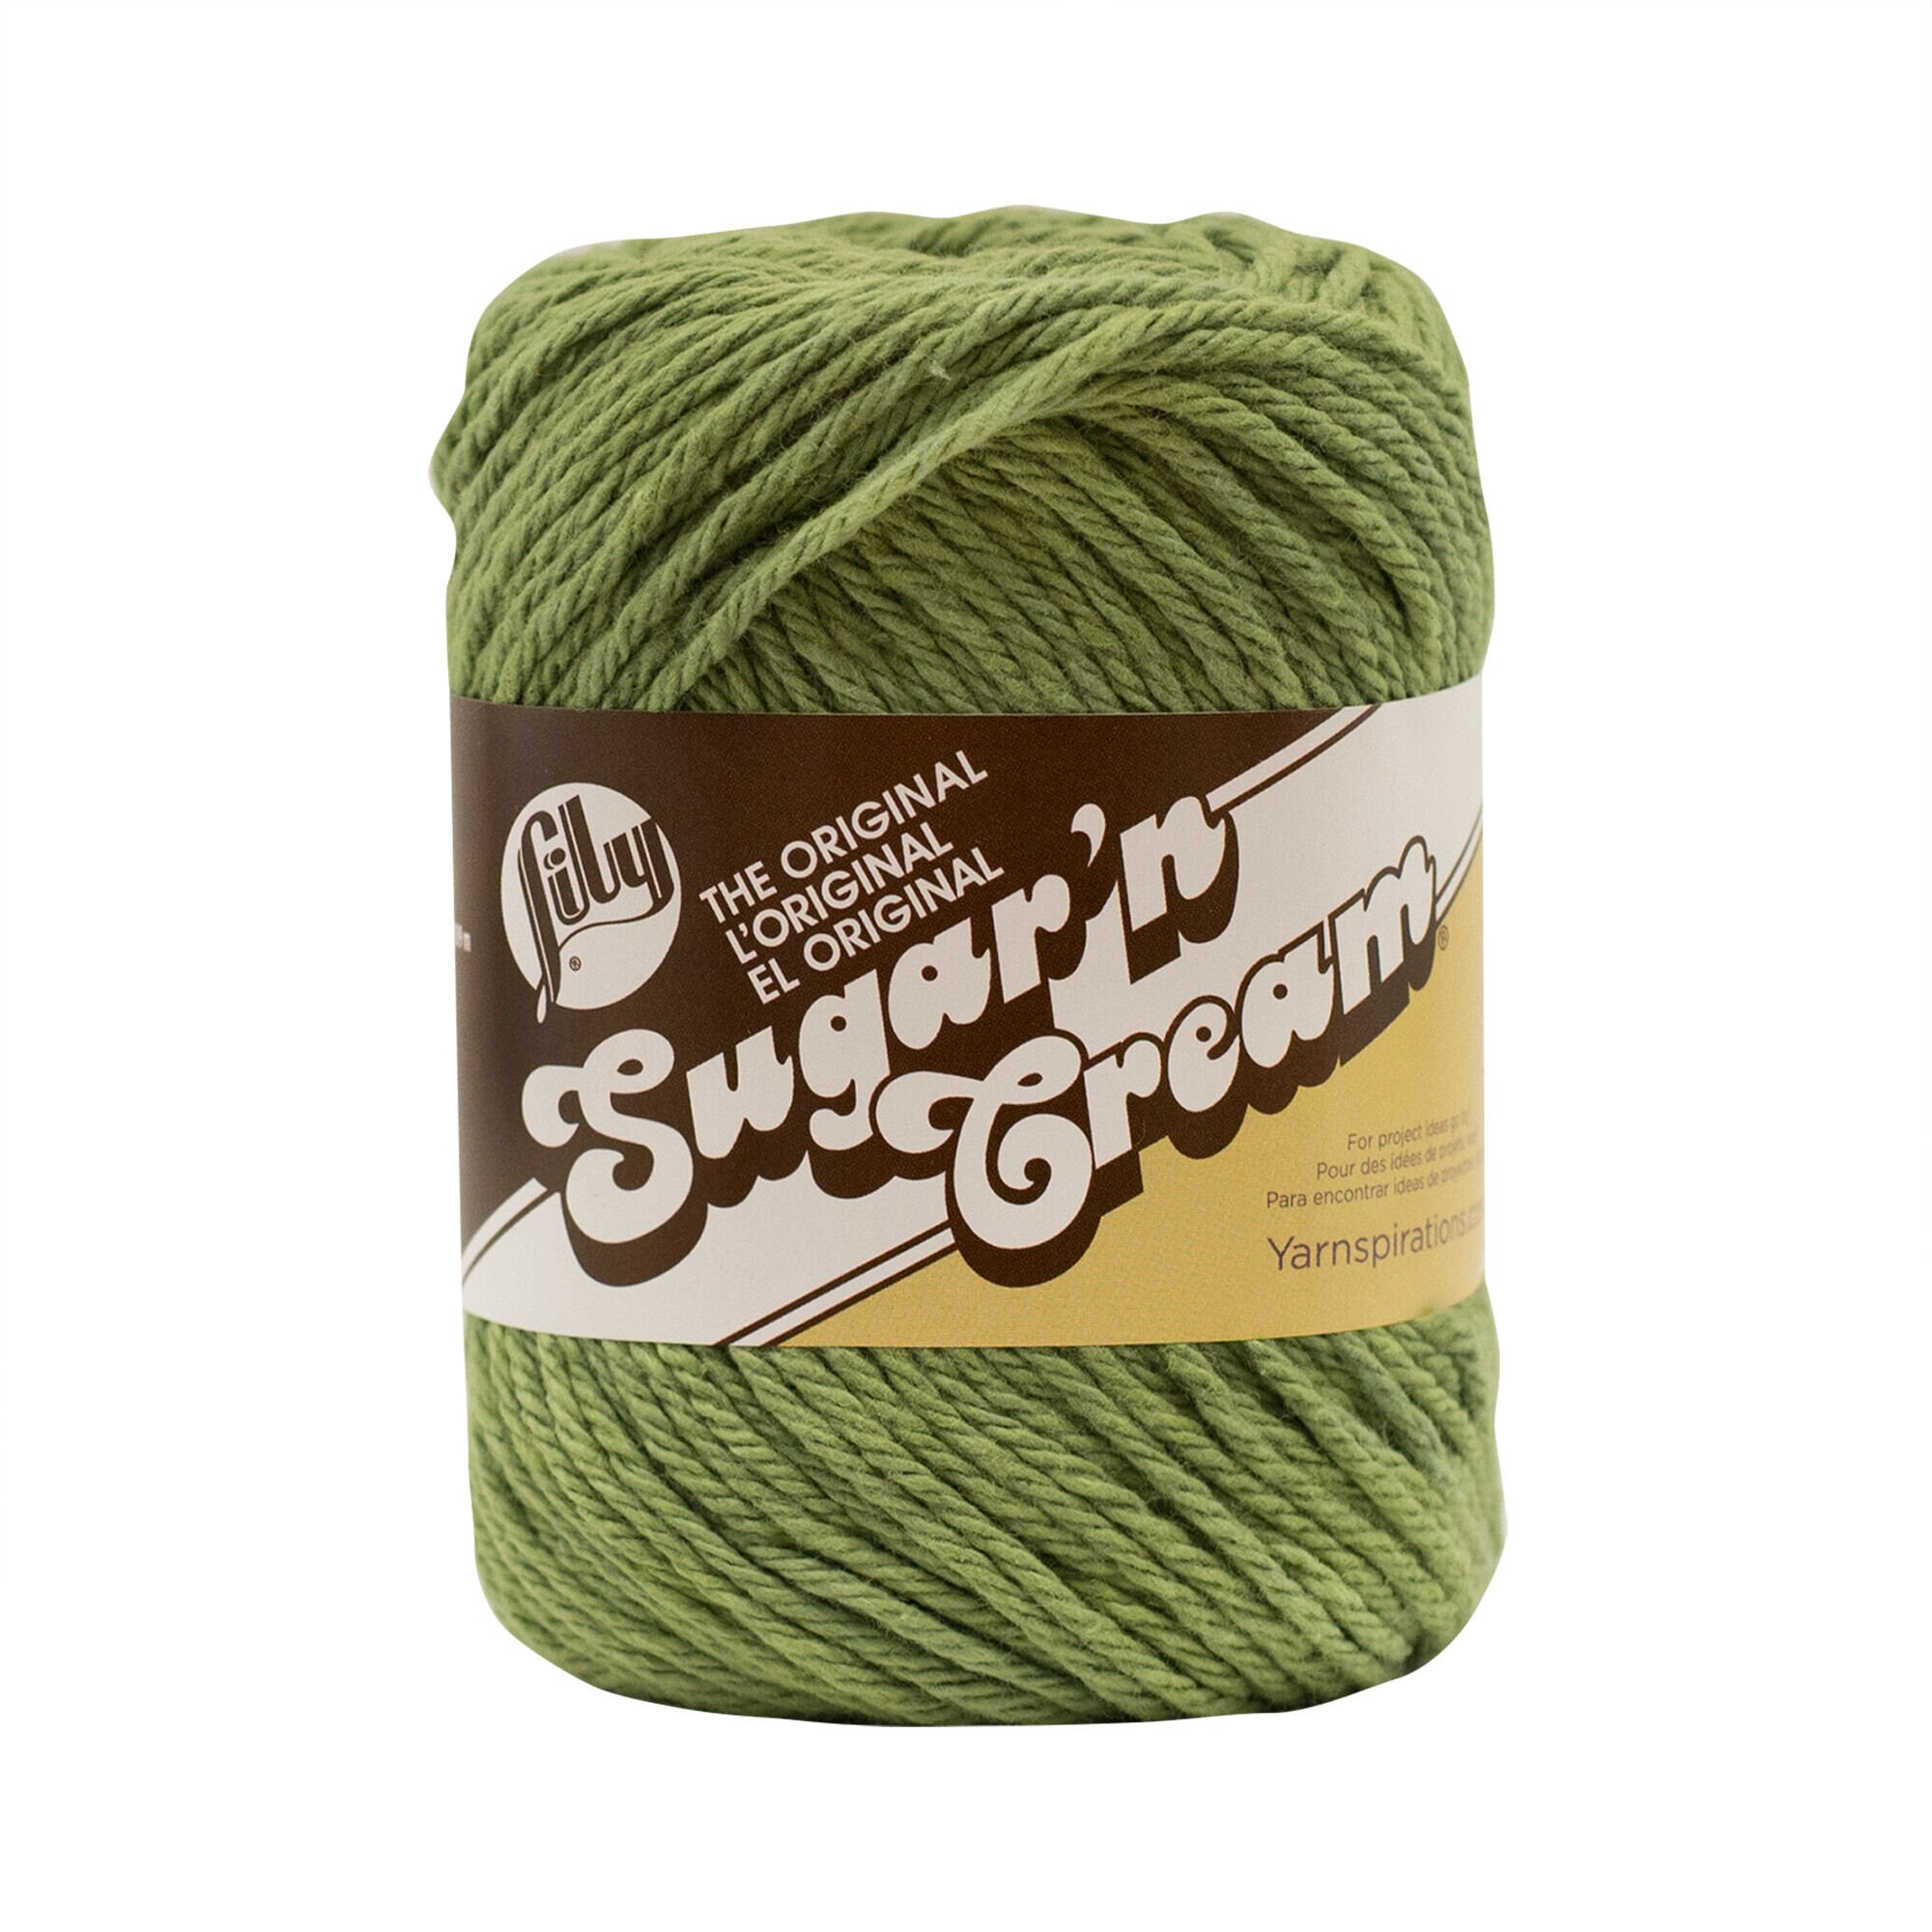 Mugwort Dye Kit for 0.45lb Fabric, Sage Green Color, Natural Dye